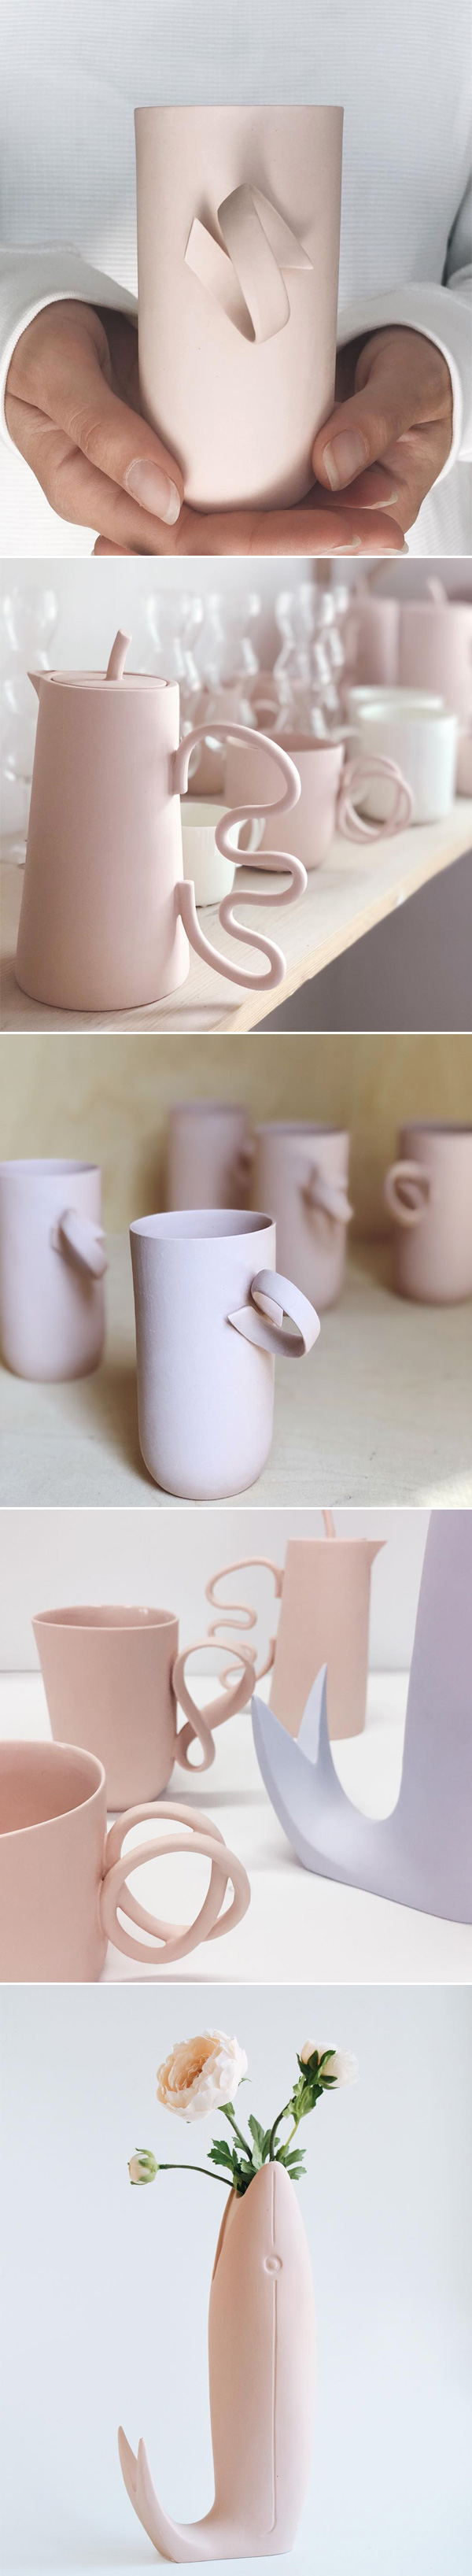 Ende Ceramics, by polish duo Natalia Gruszecka and Jakub Kwarcinski 